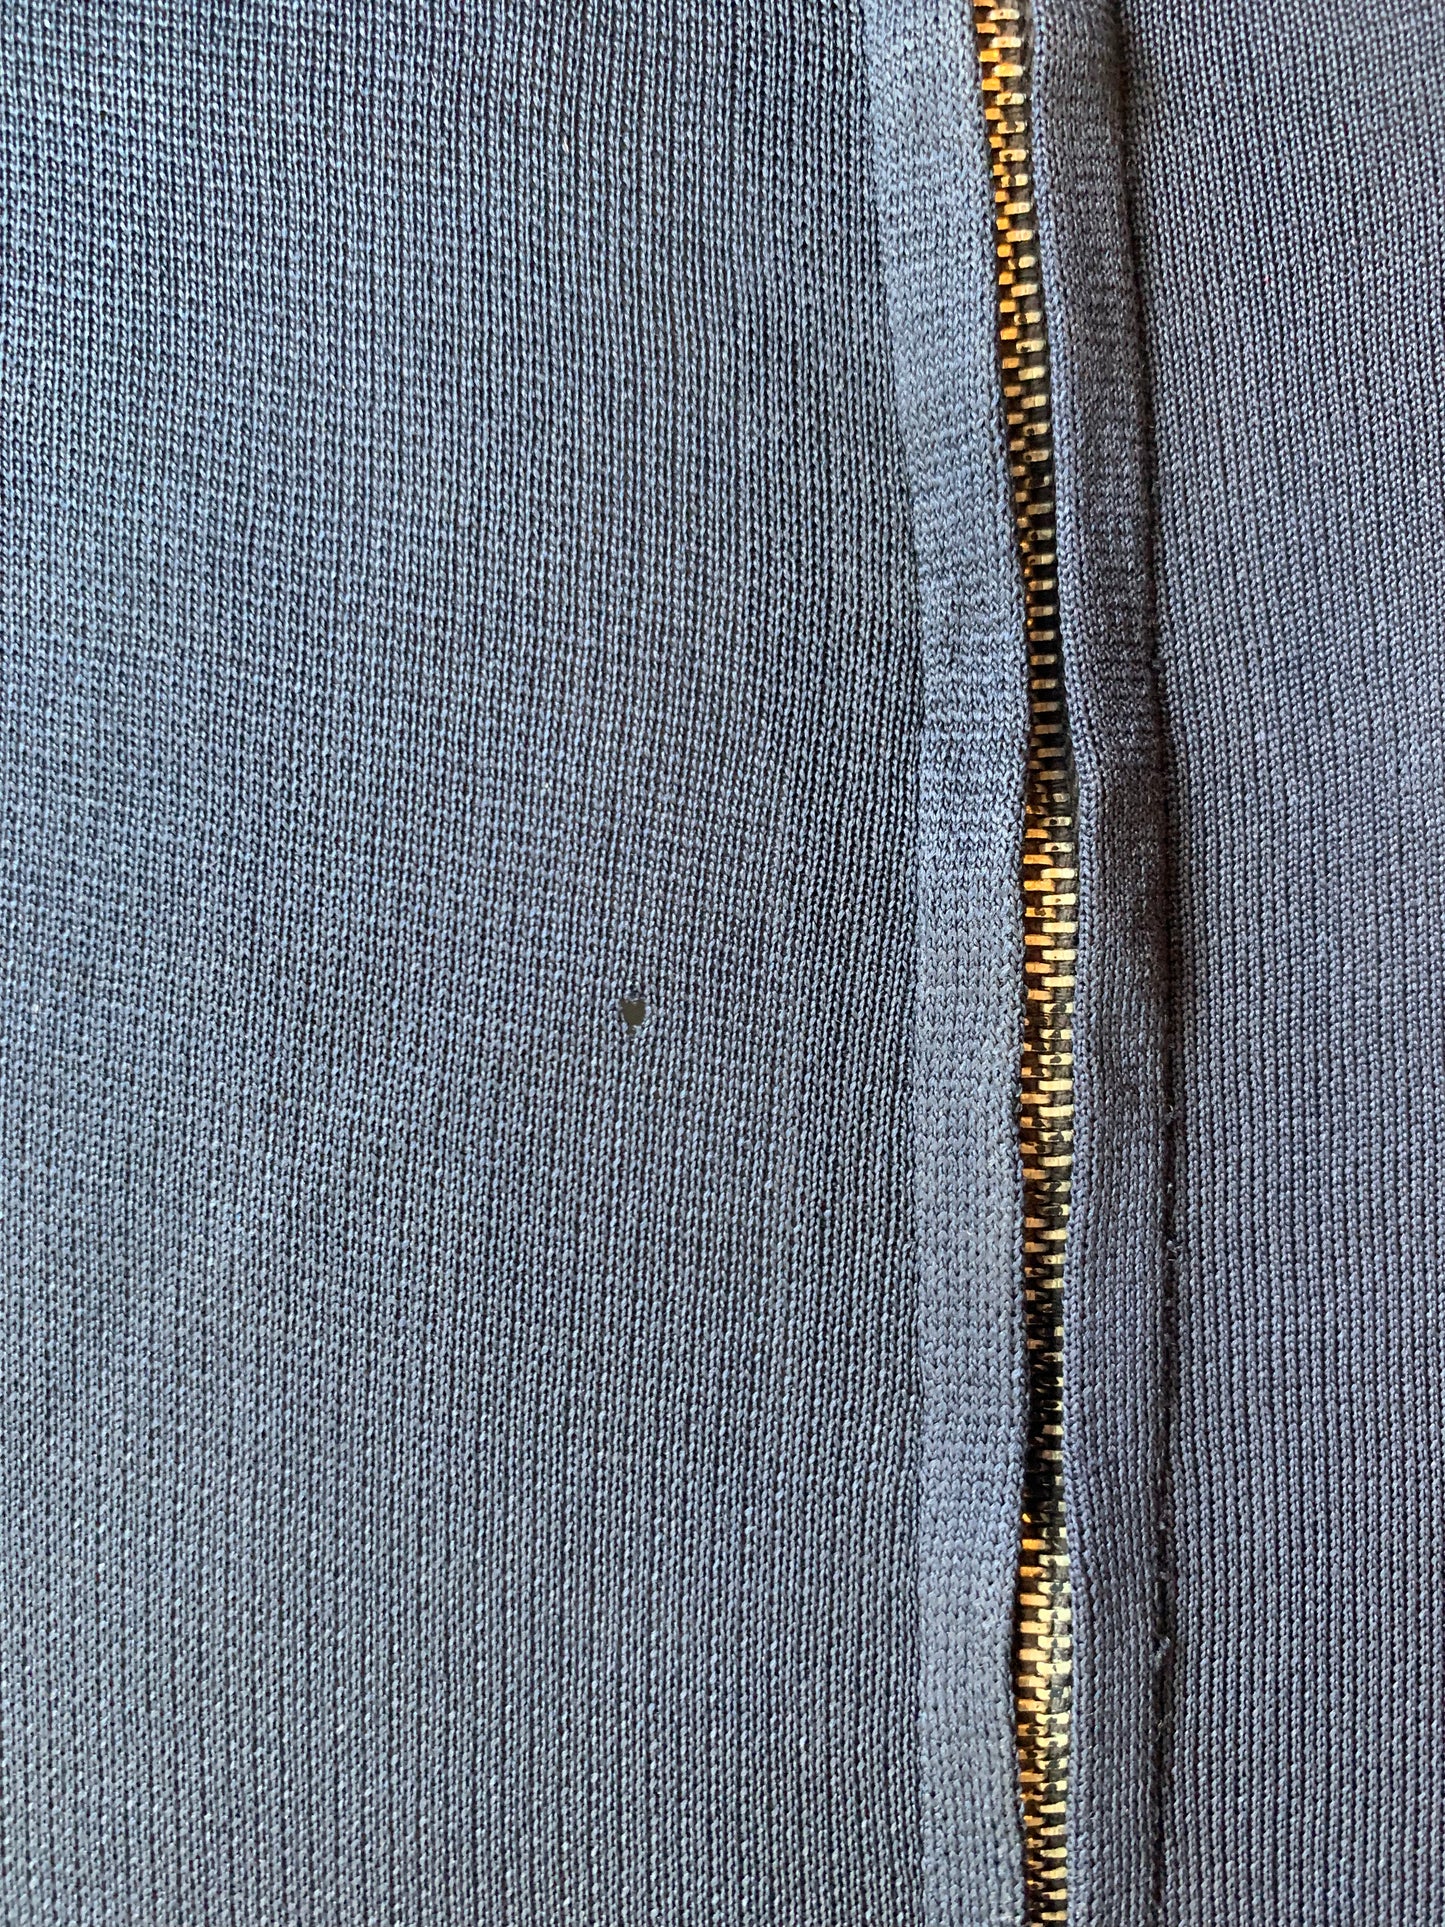 70s Dagger Collar Polo w/ Button Details (L)